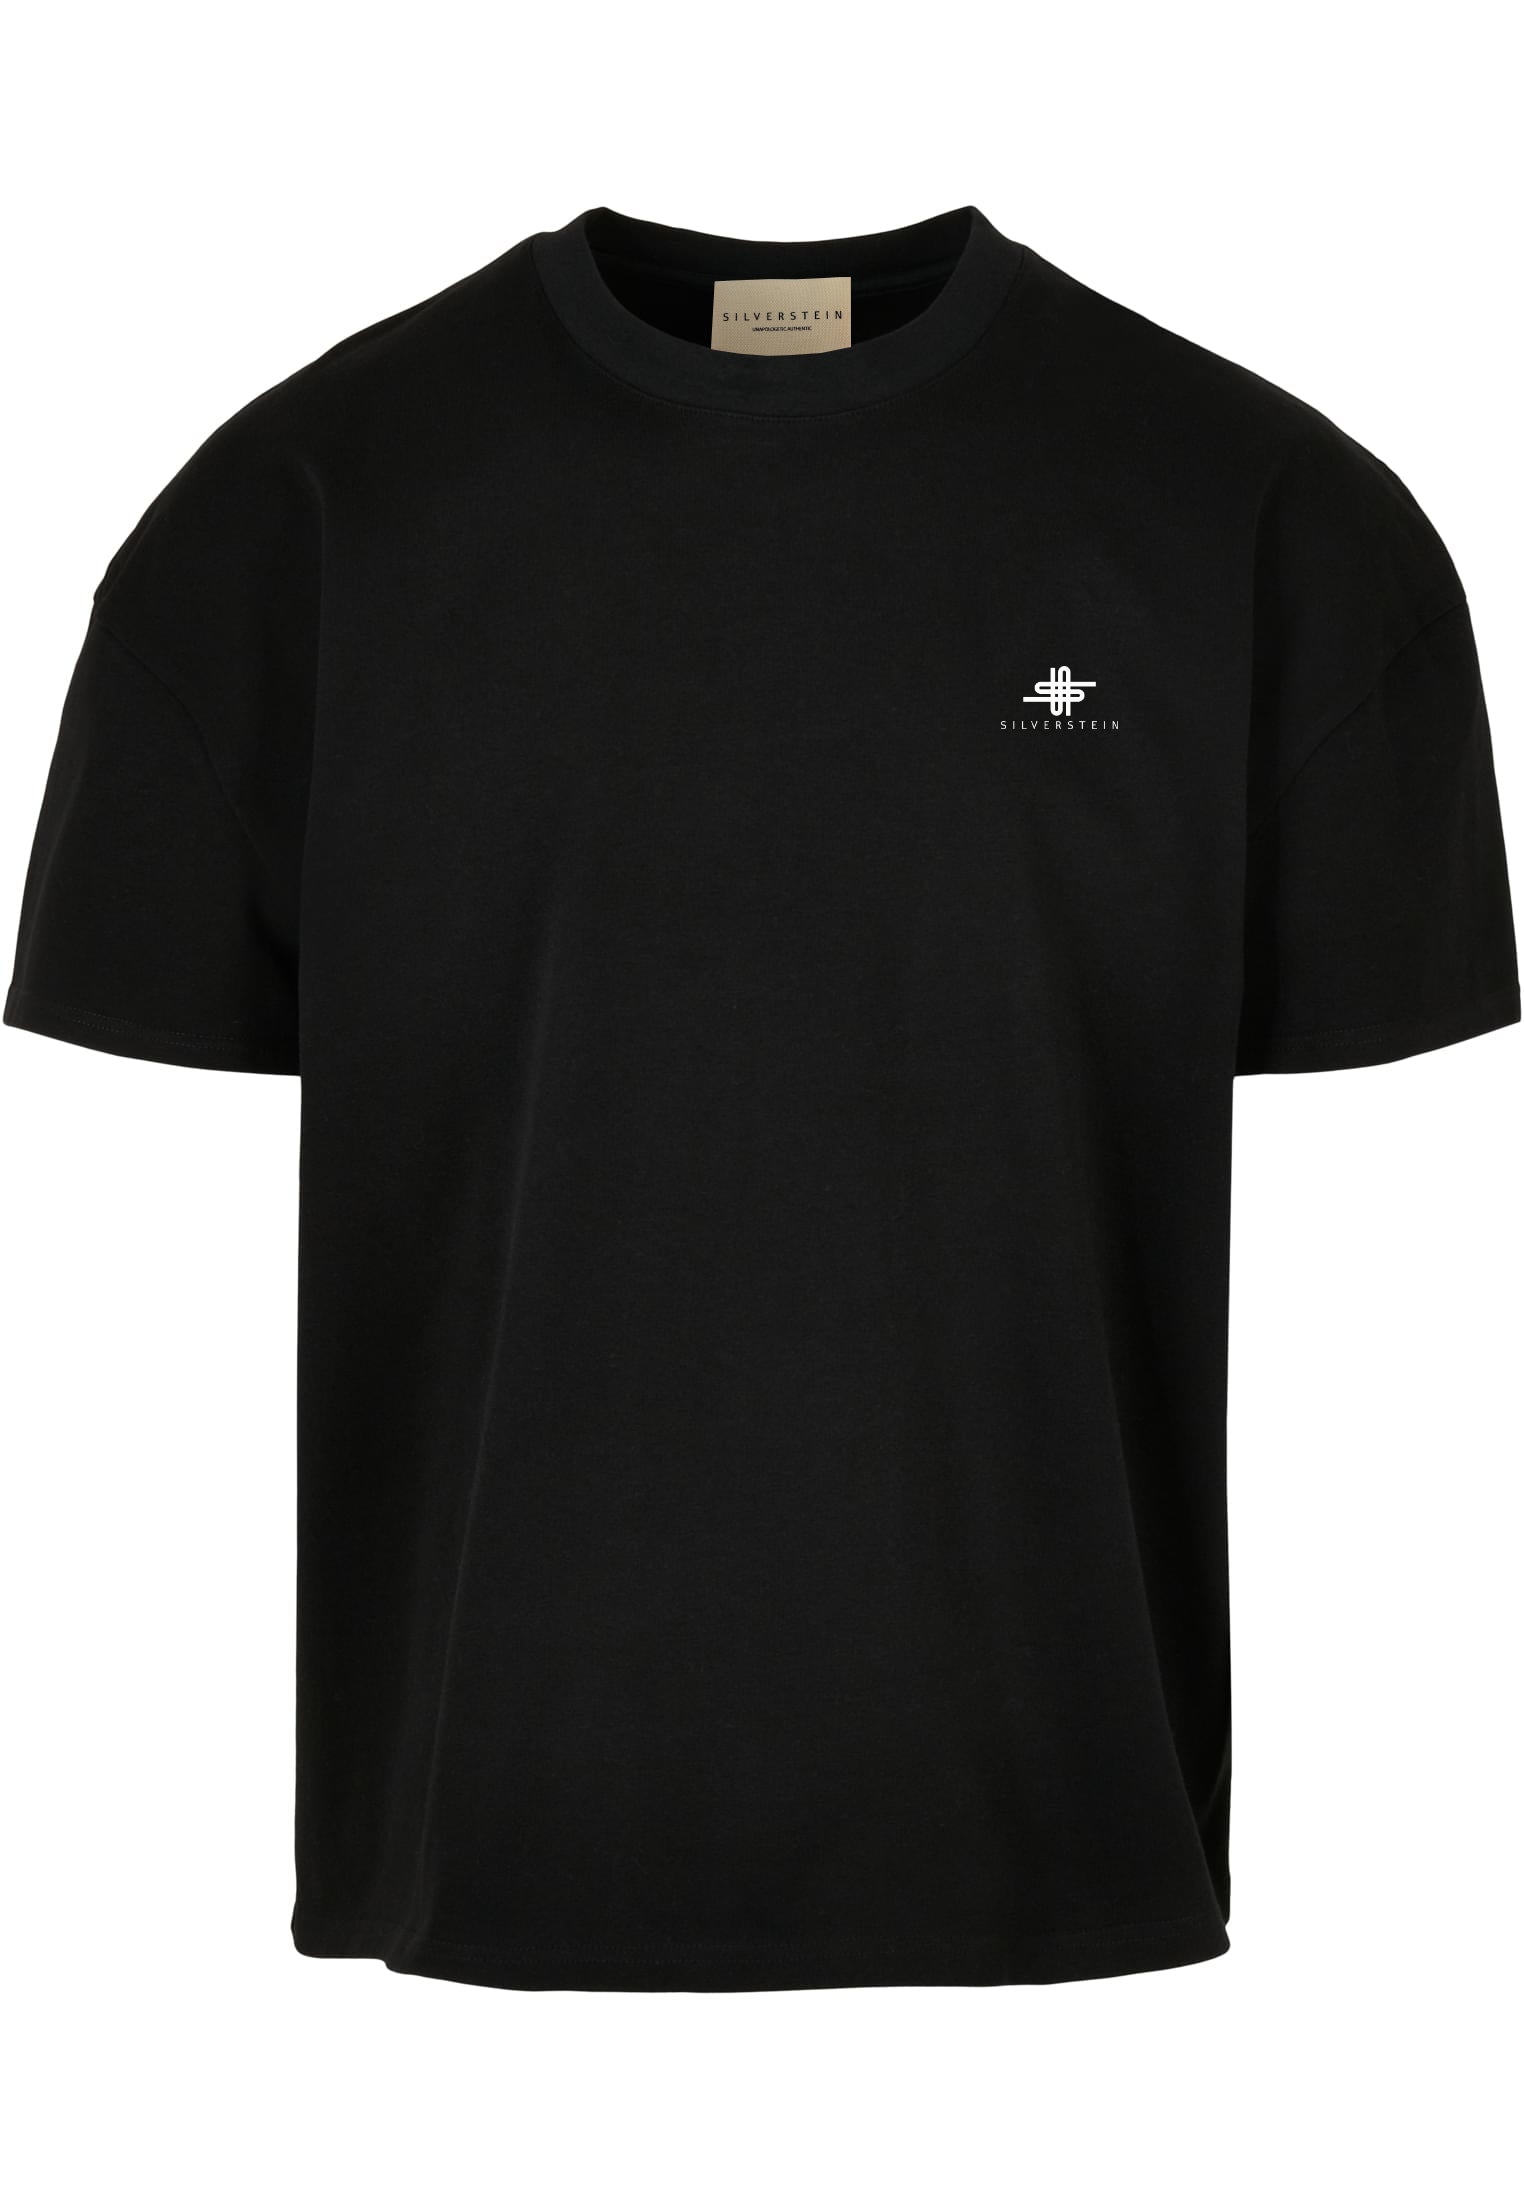 Black "Butterfly Moon" Unisex T-Shirt